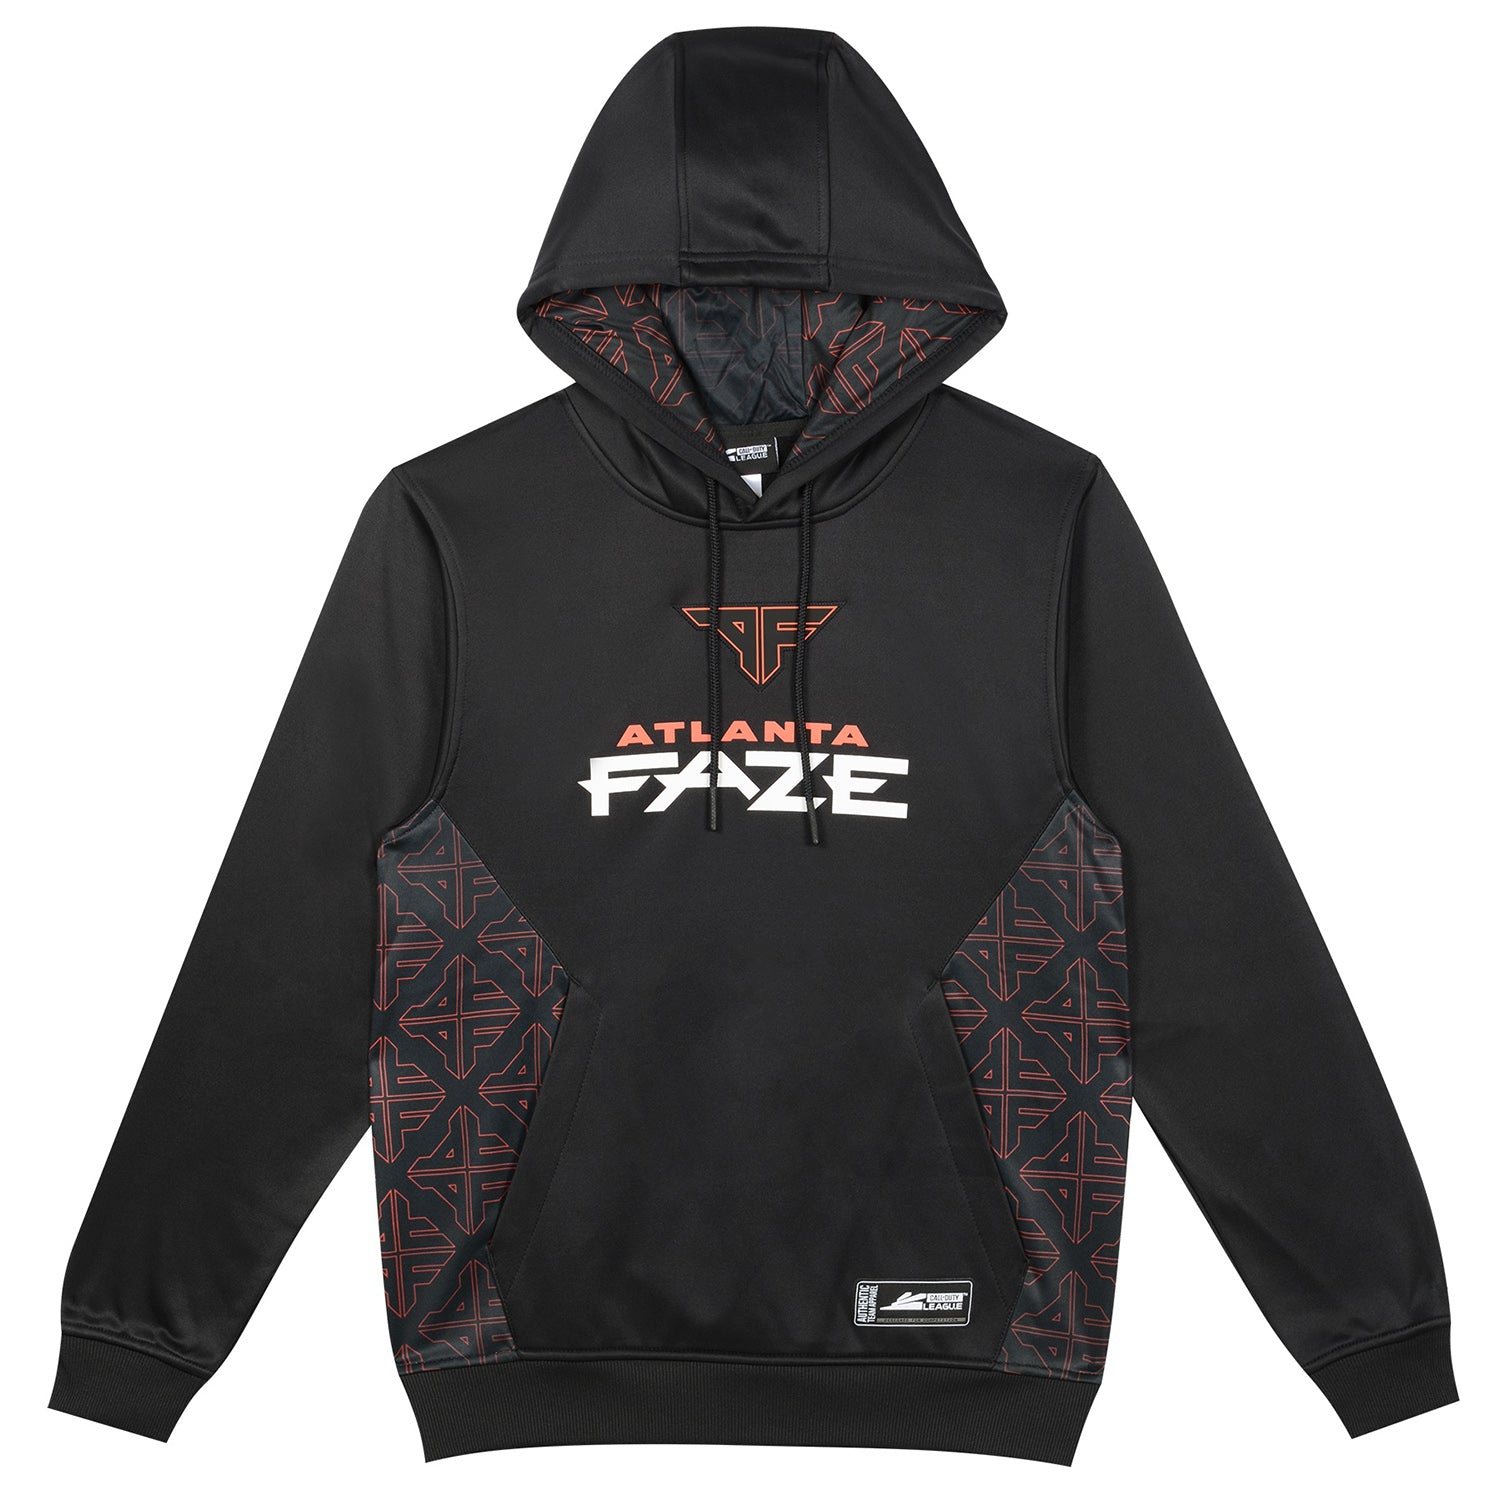 FaZe Clan Logo Black/Red Pullover Hoodie Size Medium [M]